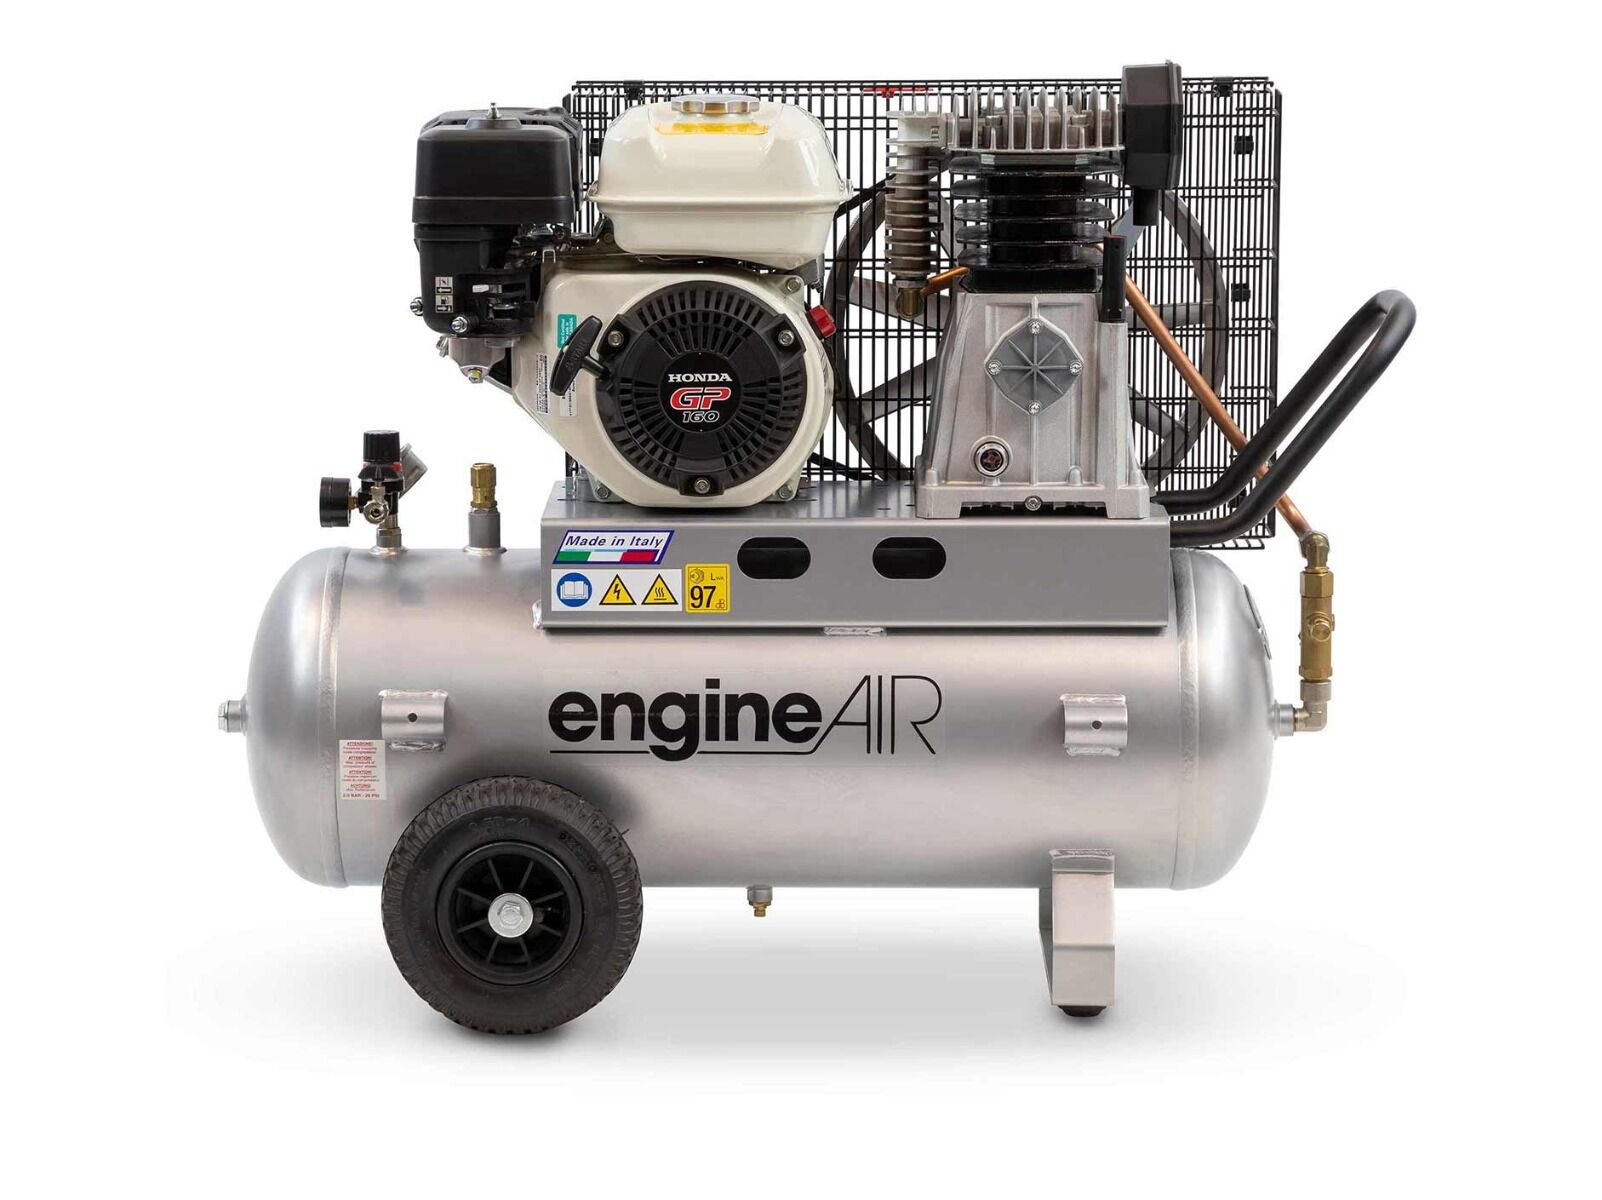 EngineAIR compresseur à essence 5/50 10 4,8HP 50L